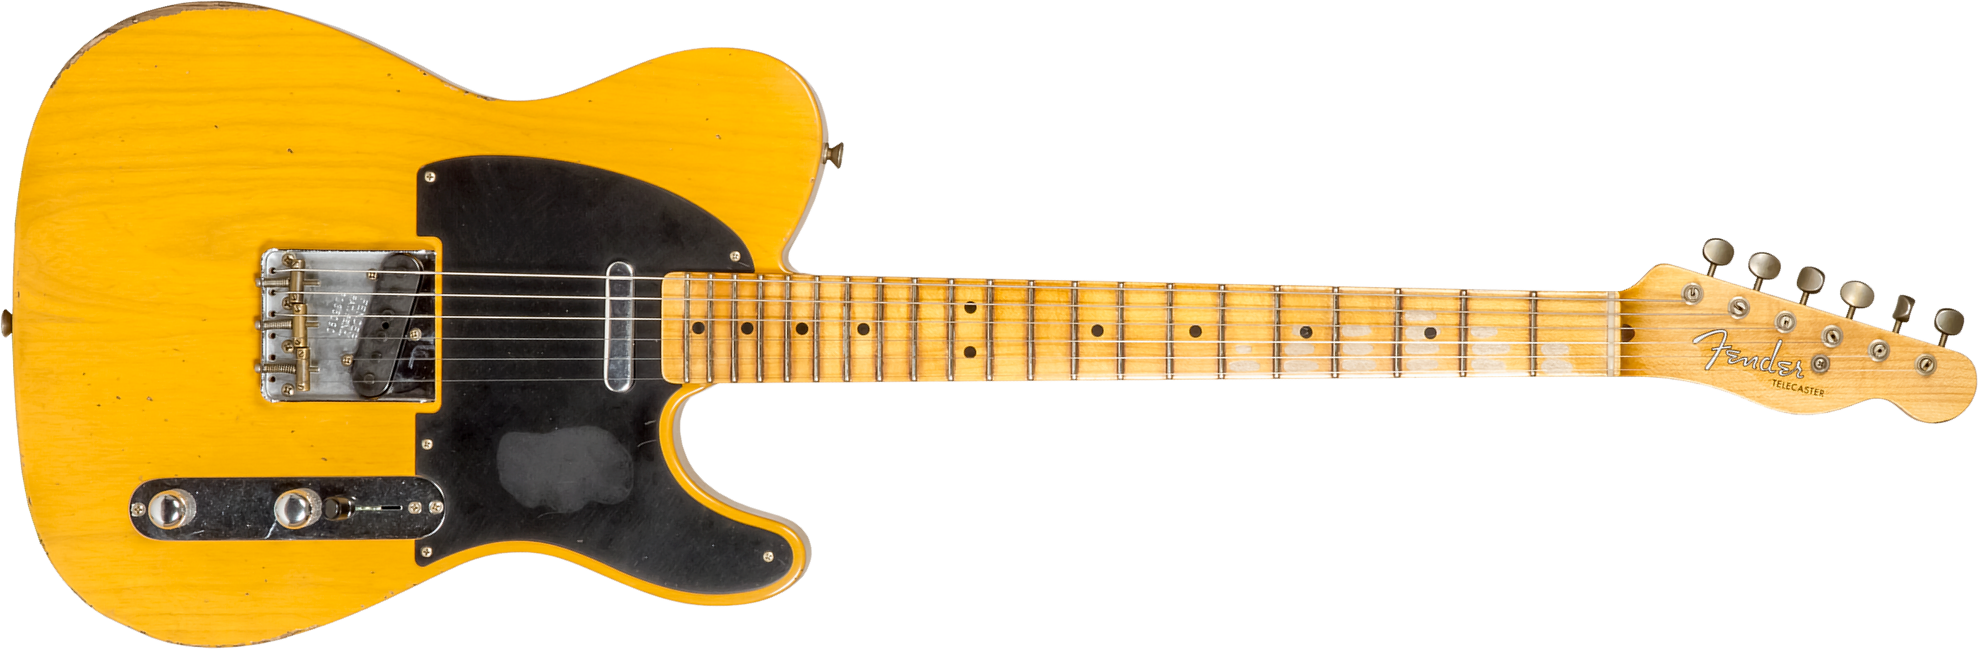 Fender Custom Shop Tele 1952 2s Ht Mn #r135090 - Relic Aged Butterscotch Blonde - Tel shape electric guitar - Main picture